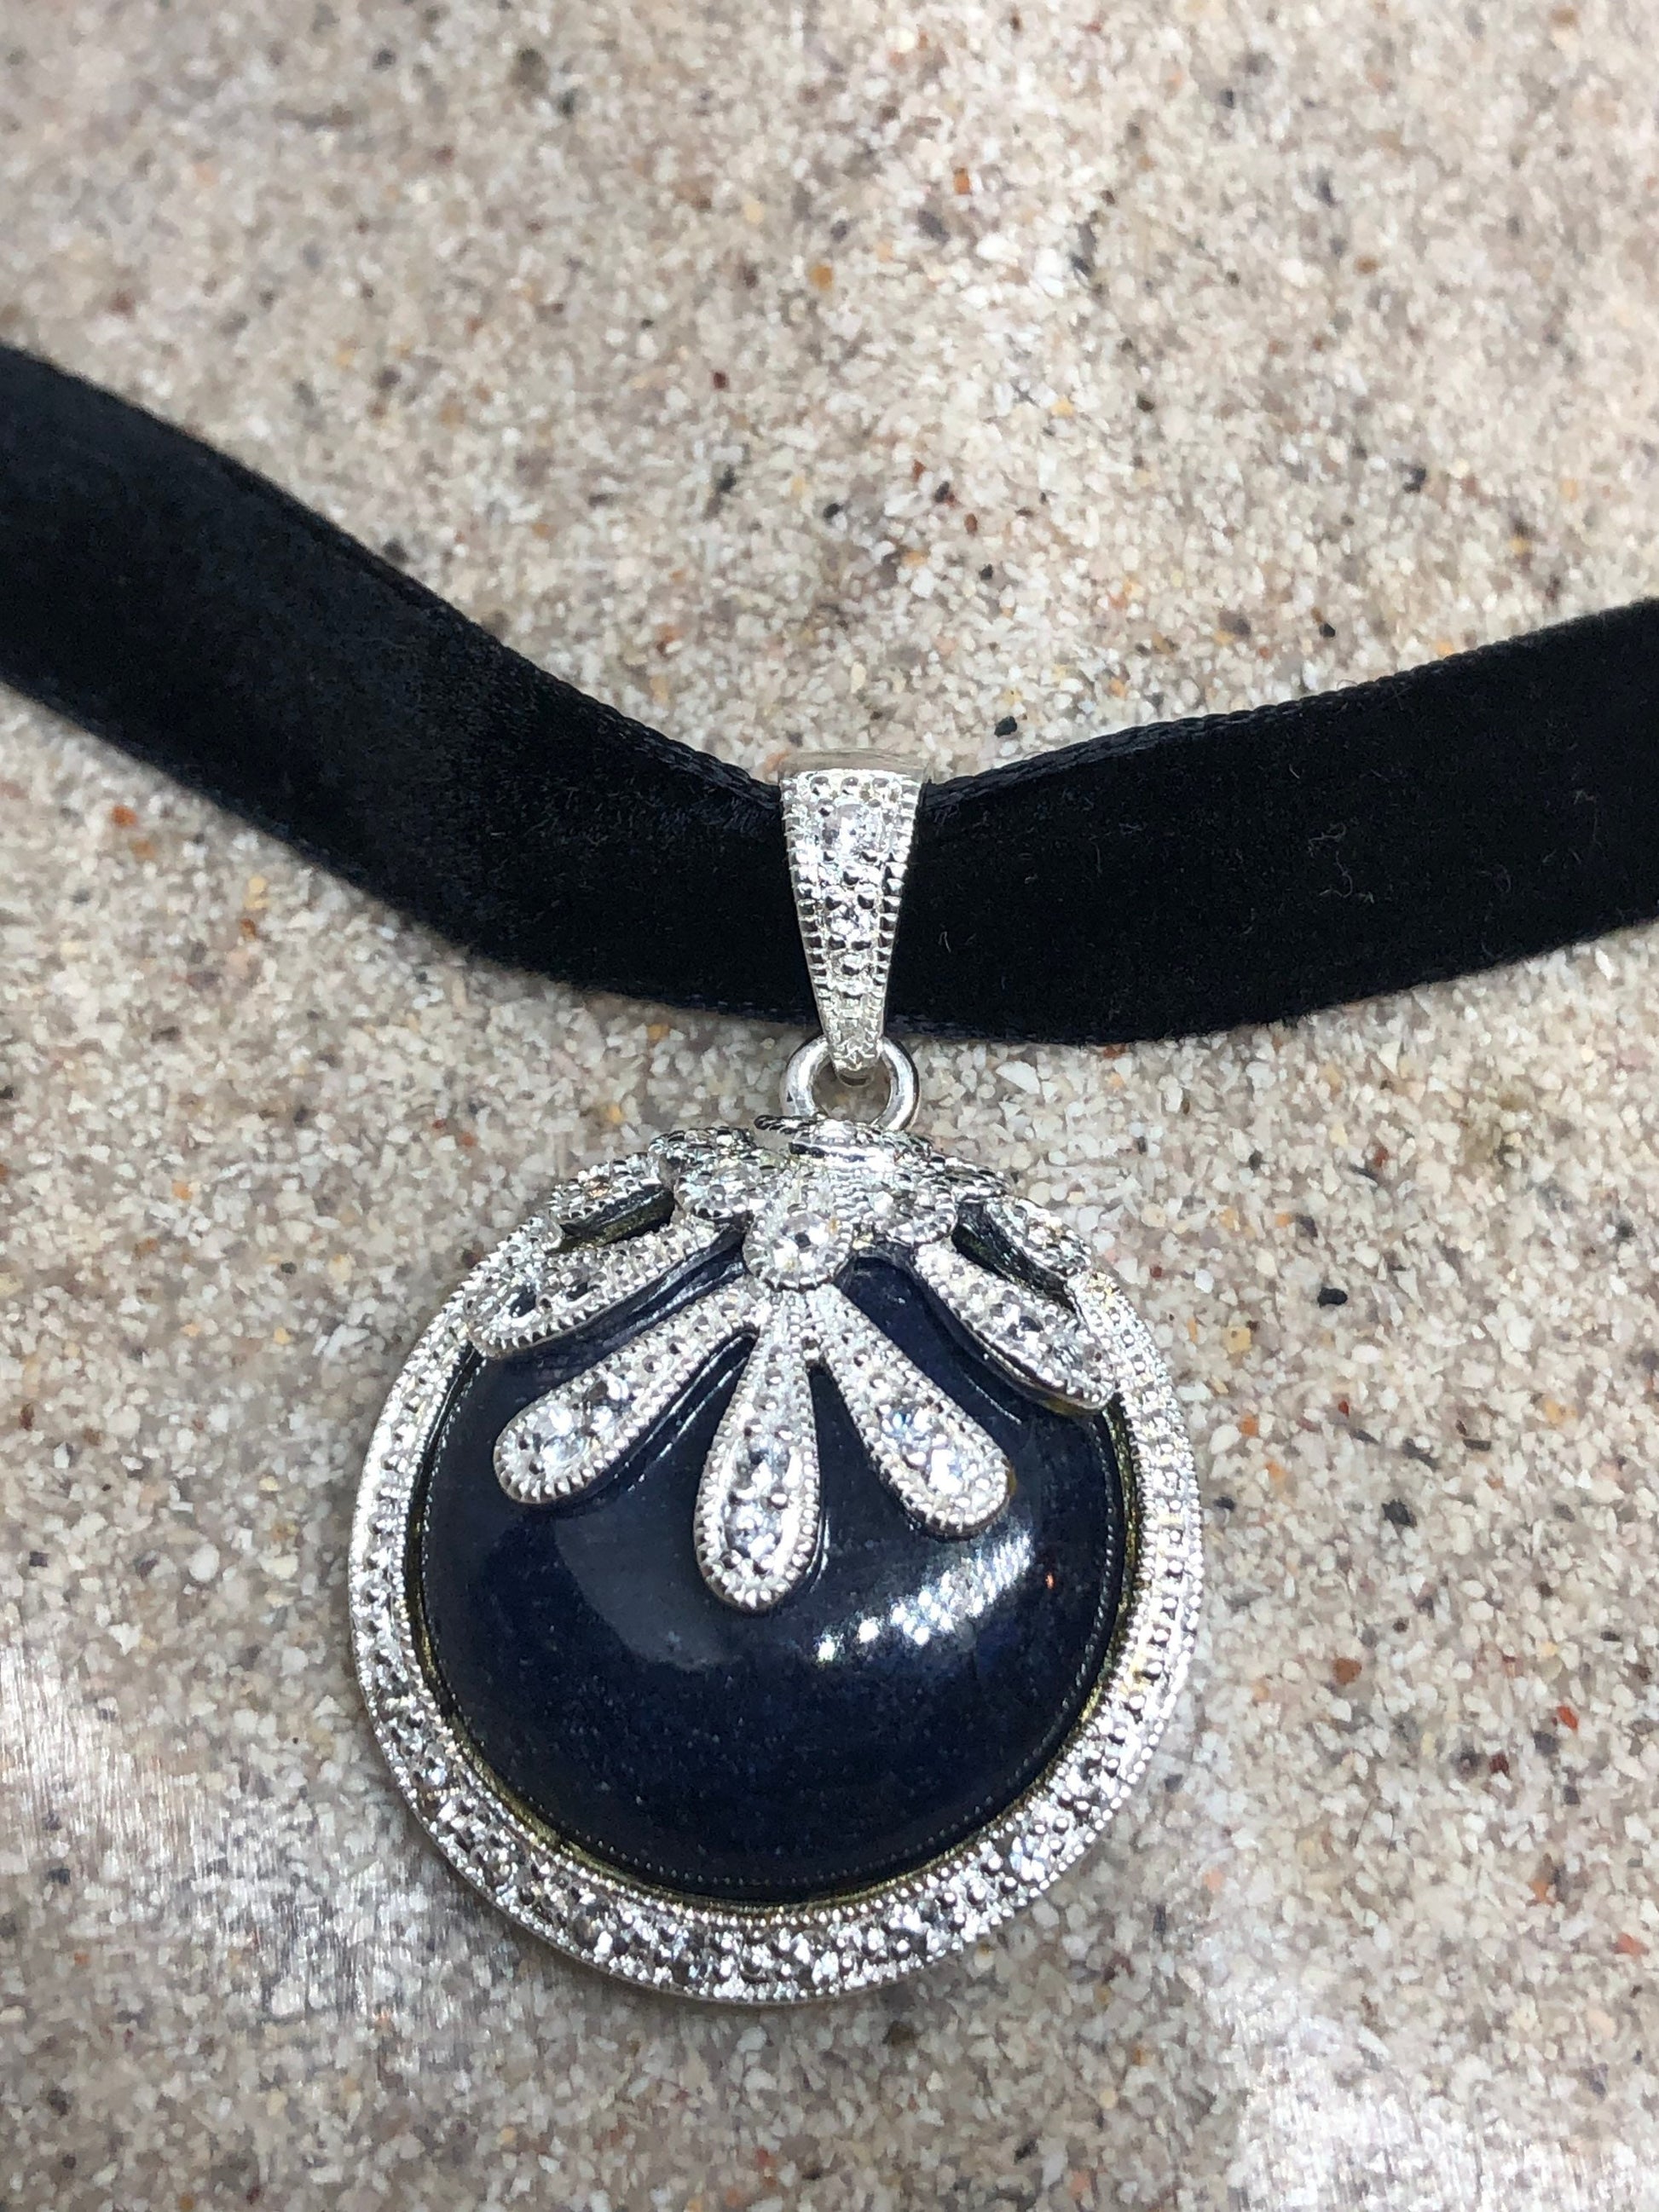 Vintage Black Onyx Choker White Sapphire 925 Sterling Silver Pendant Necklace